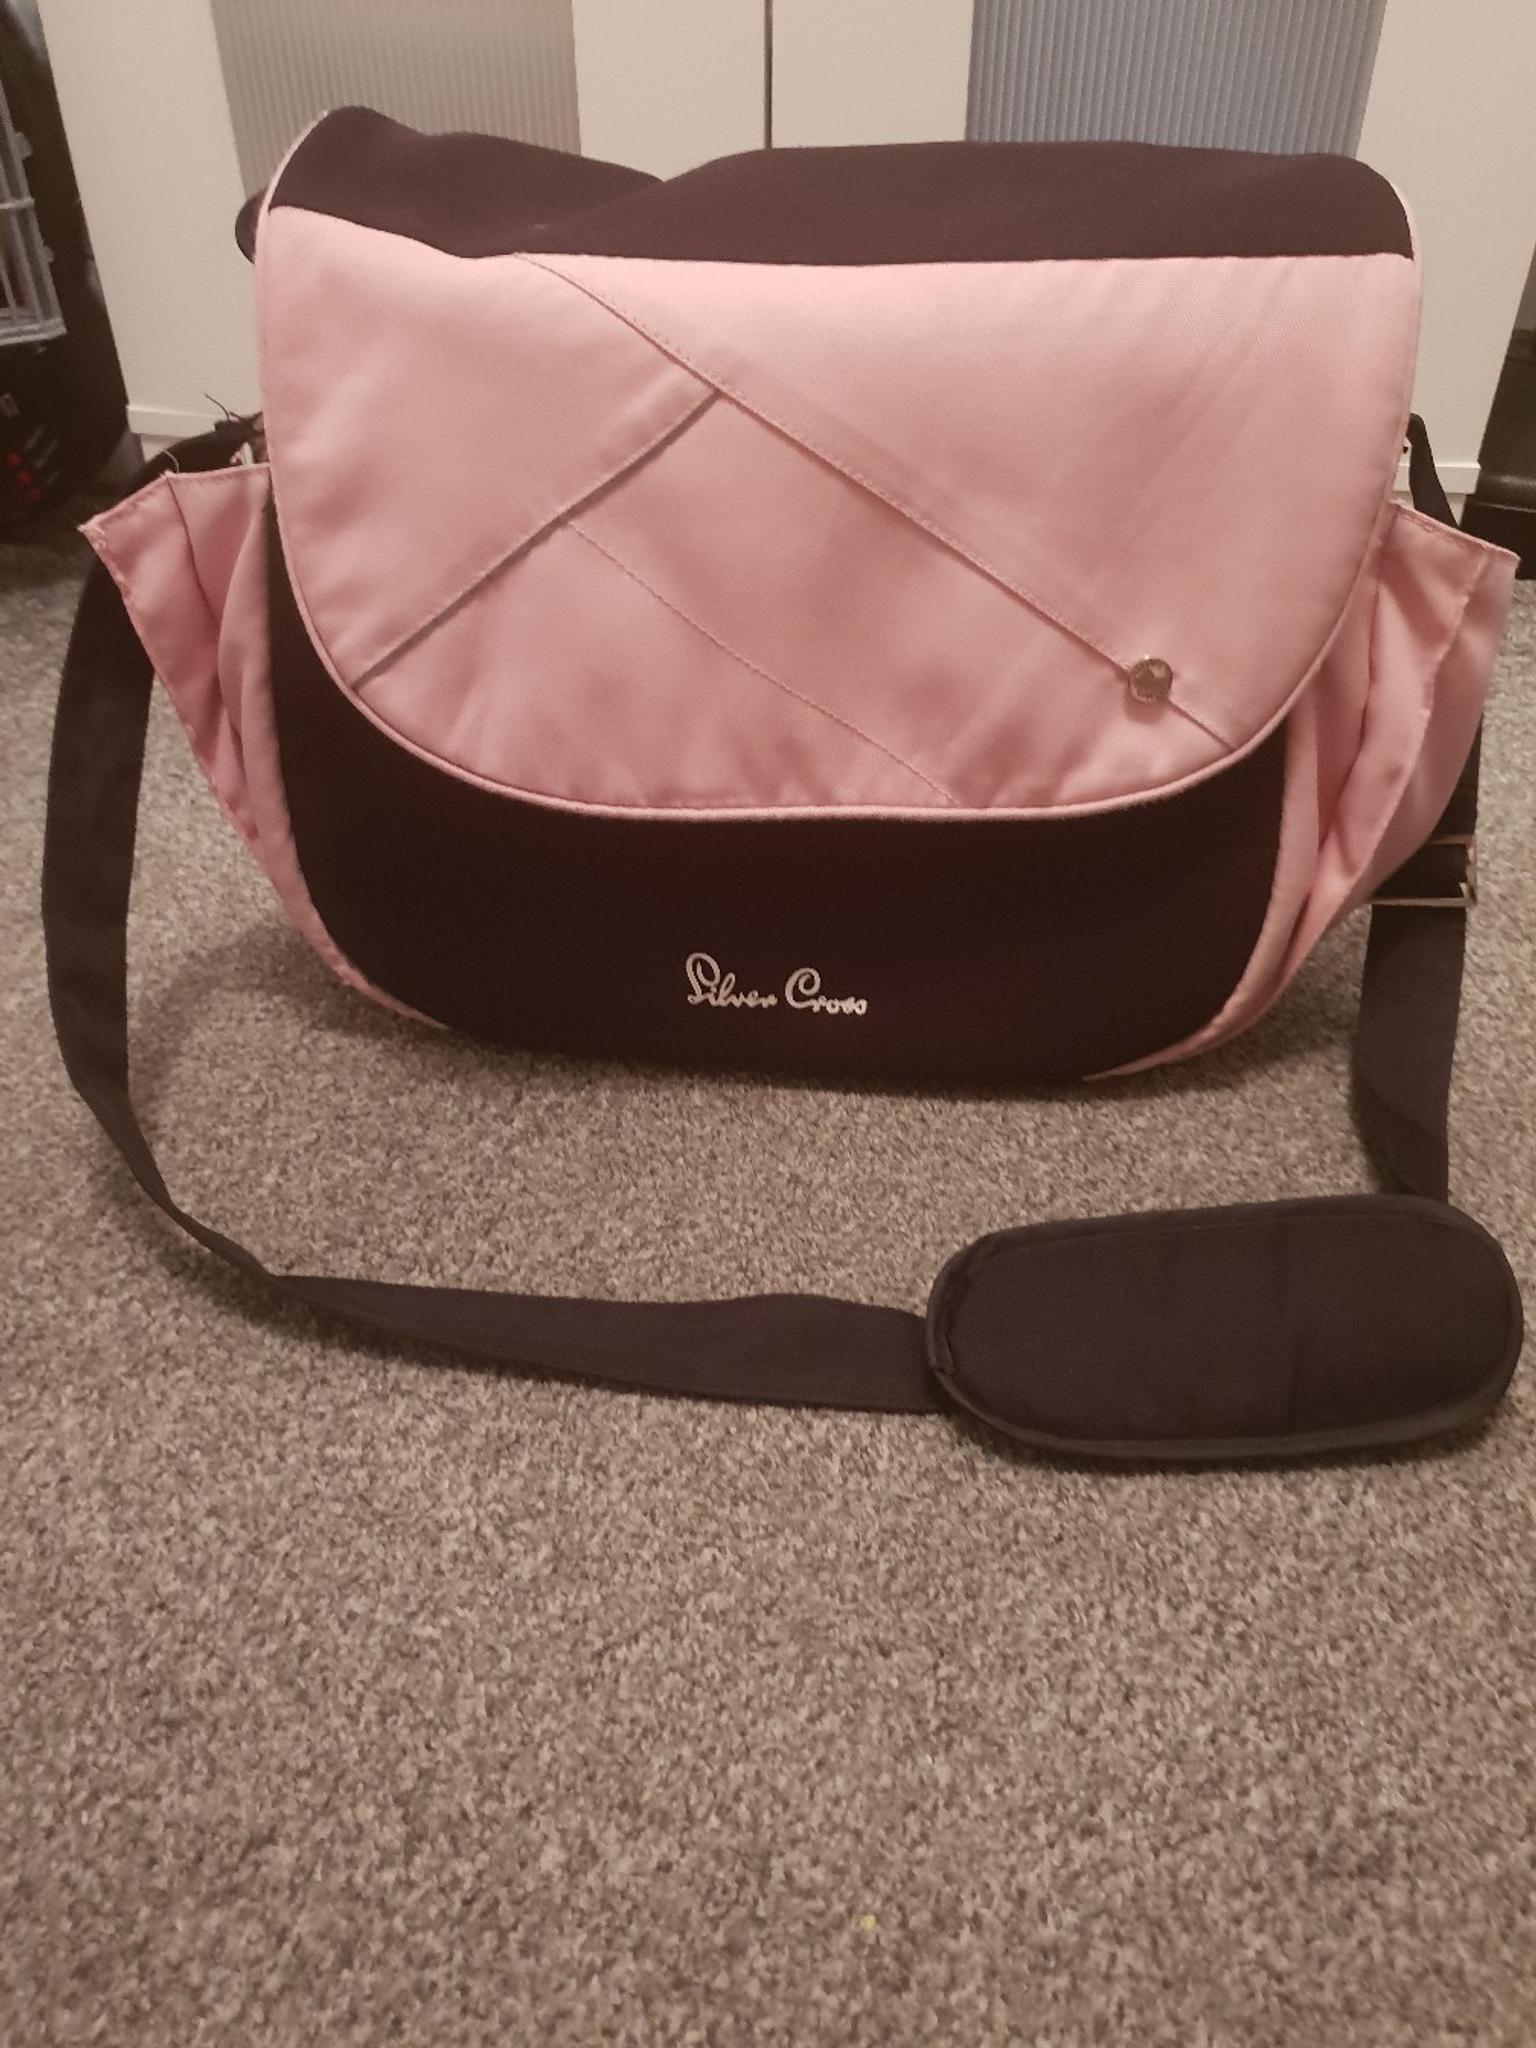 silvercross vintage pink changing bag 